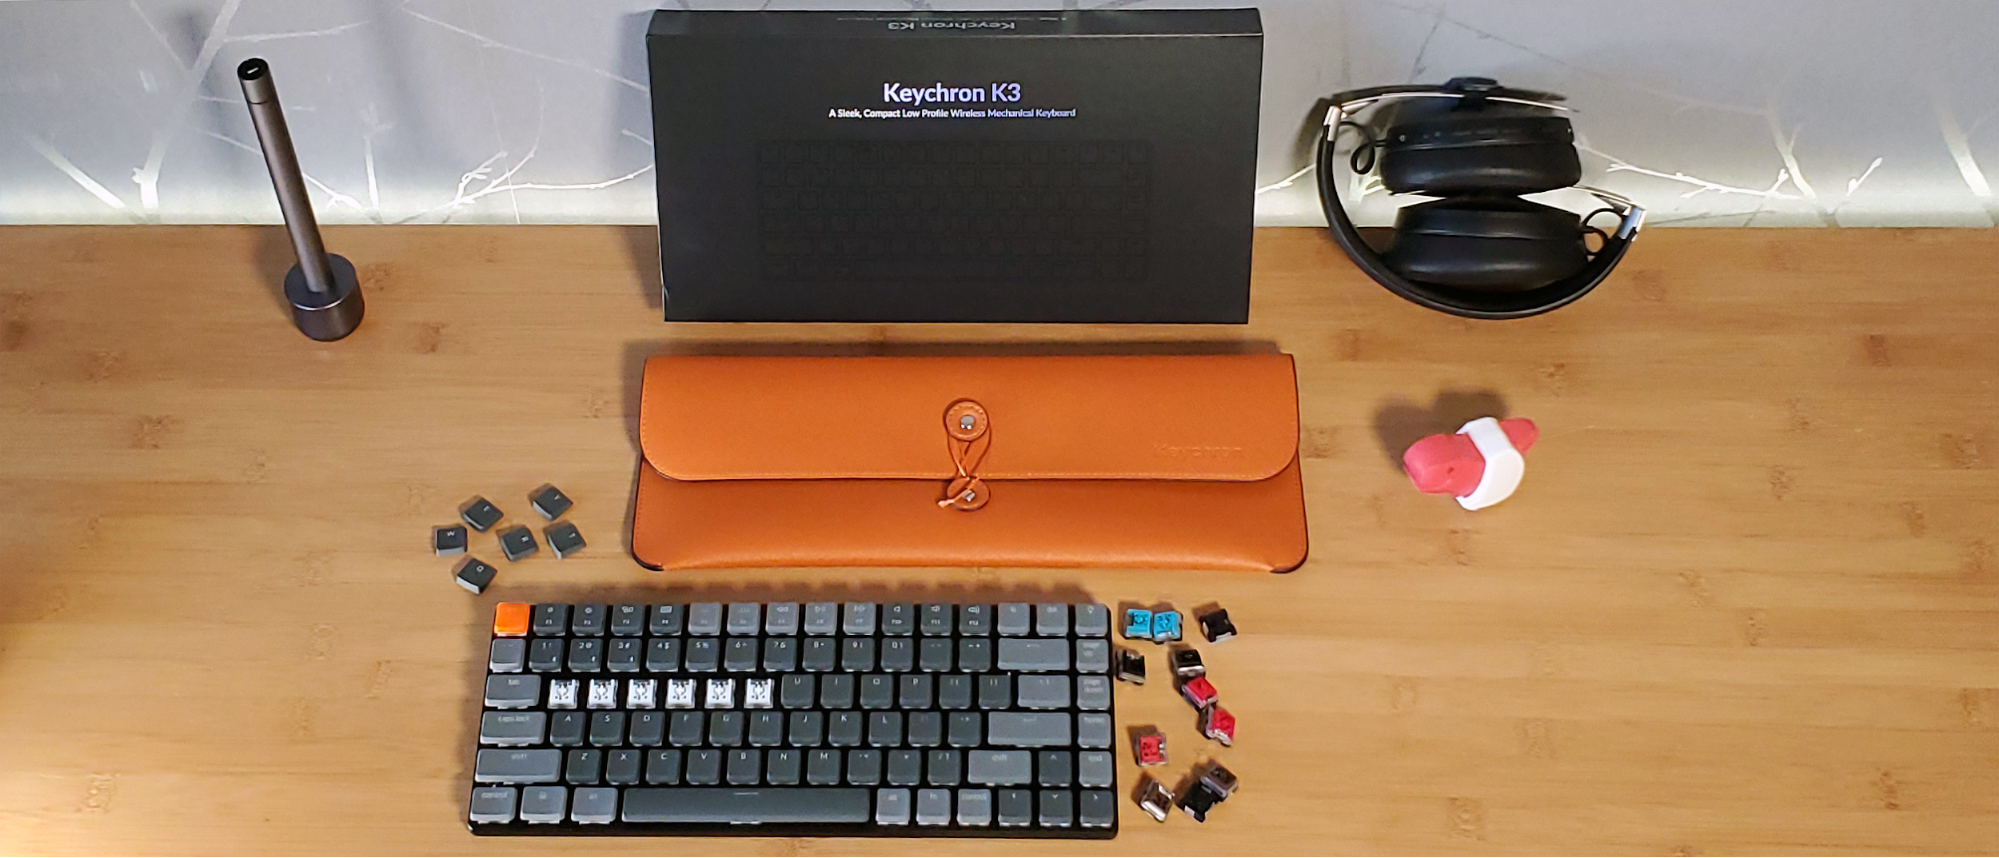 Keychron K3 Review: Slim, Customizable Style Tom's Hardware